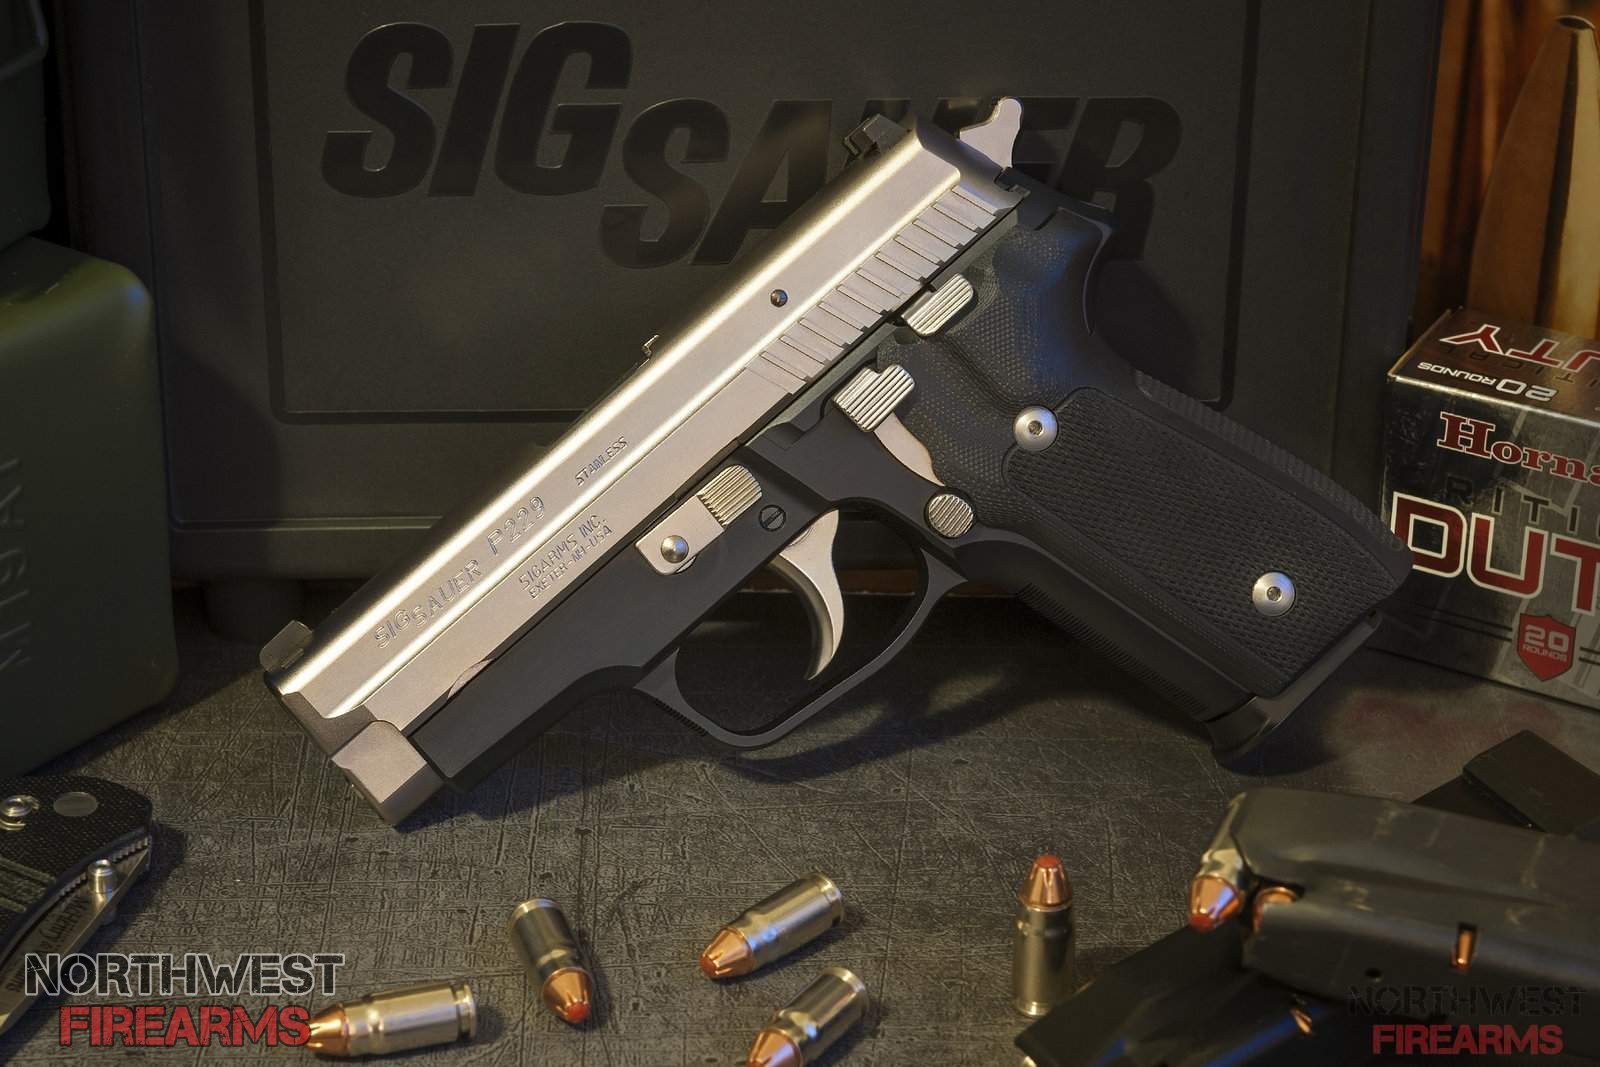 Sig P229 circa 1996 with Grayguns inc P Sait trigger